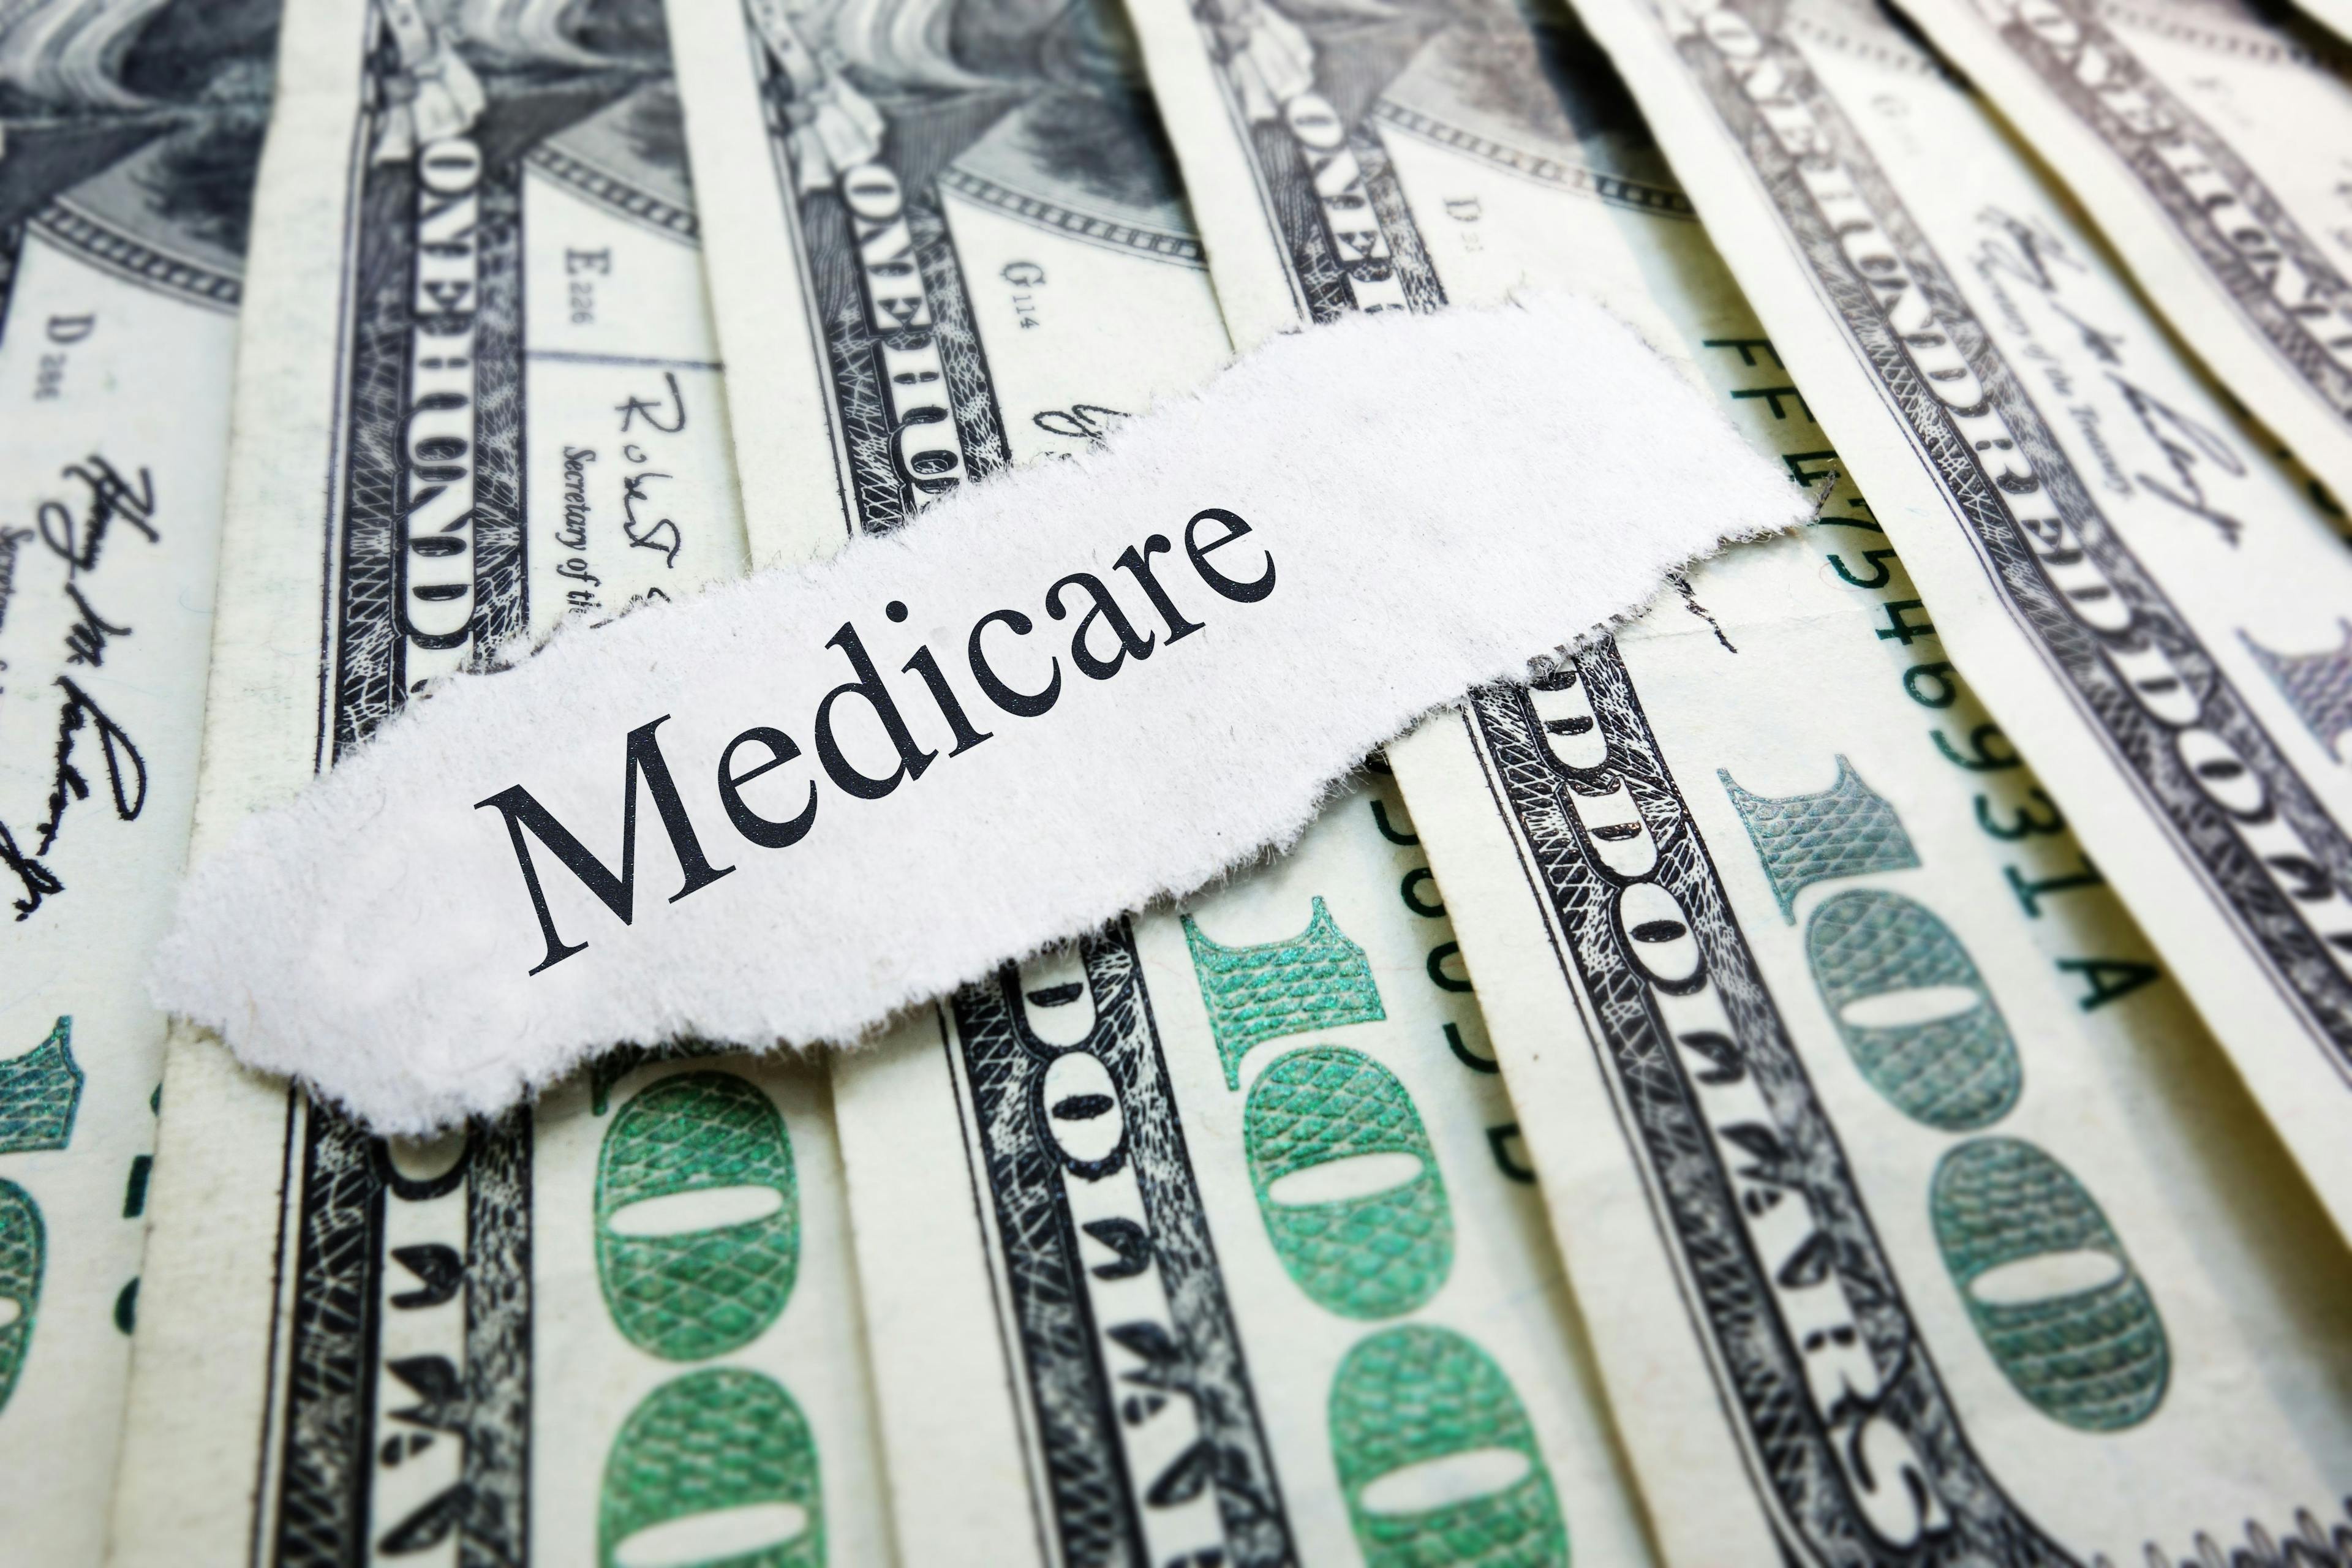 Medicare text laid on $100 bills ©zimmytws-stock.adobe.com